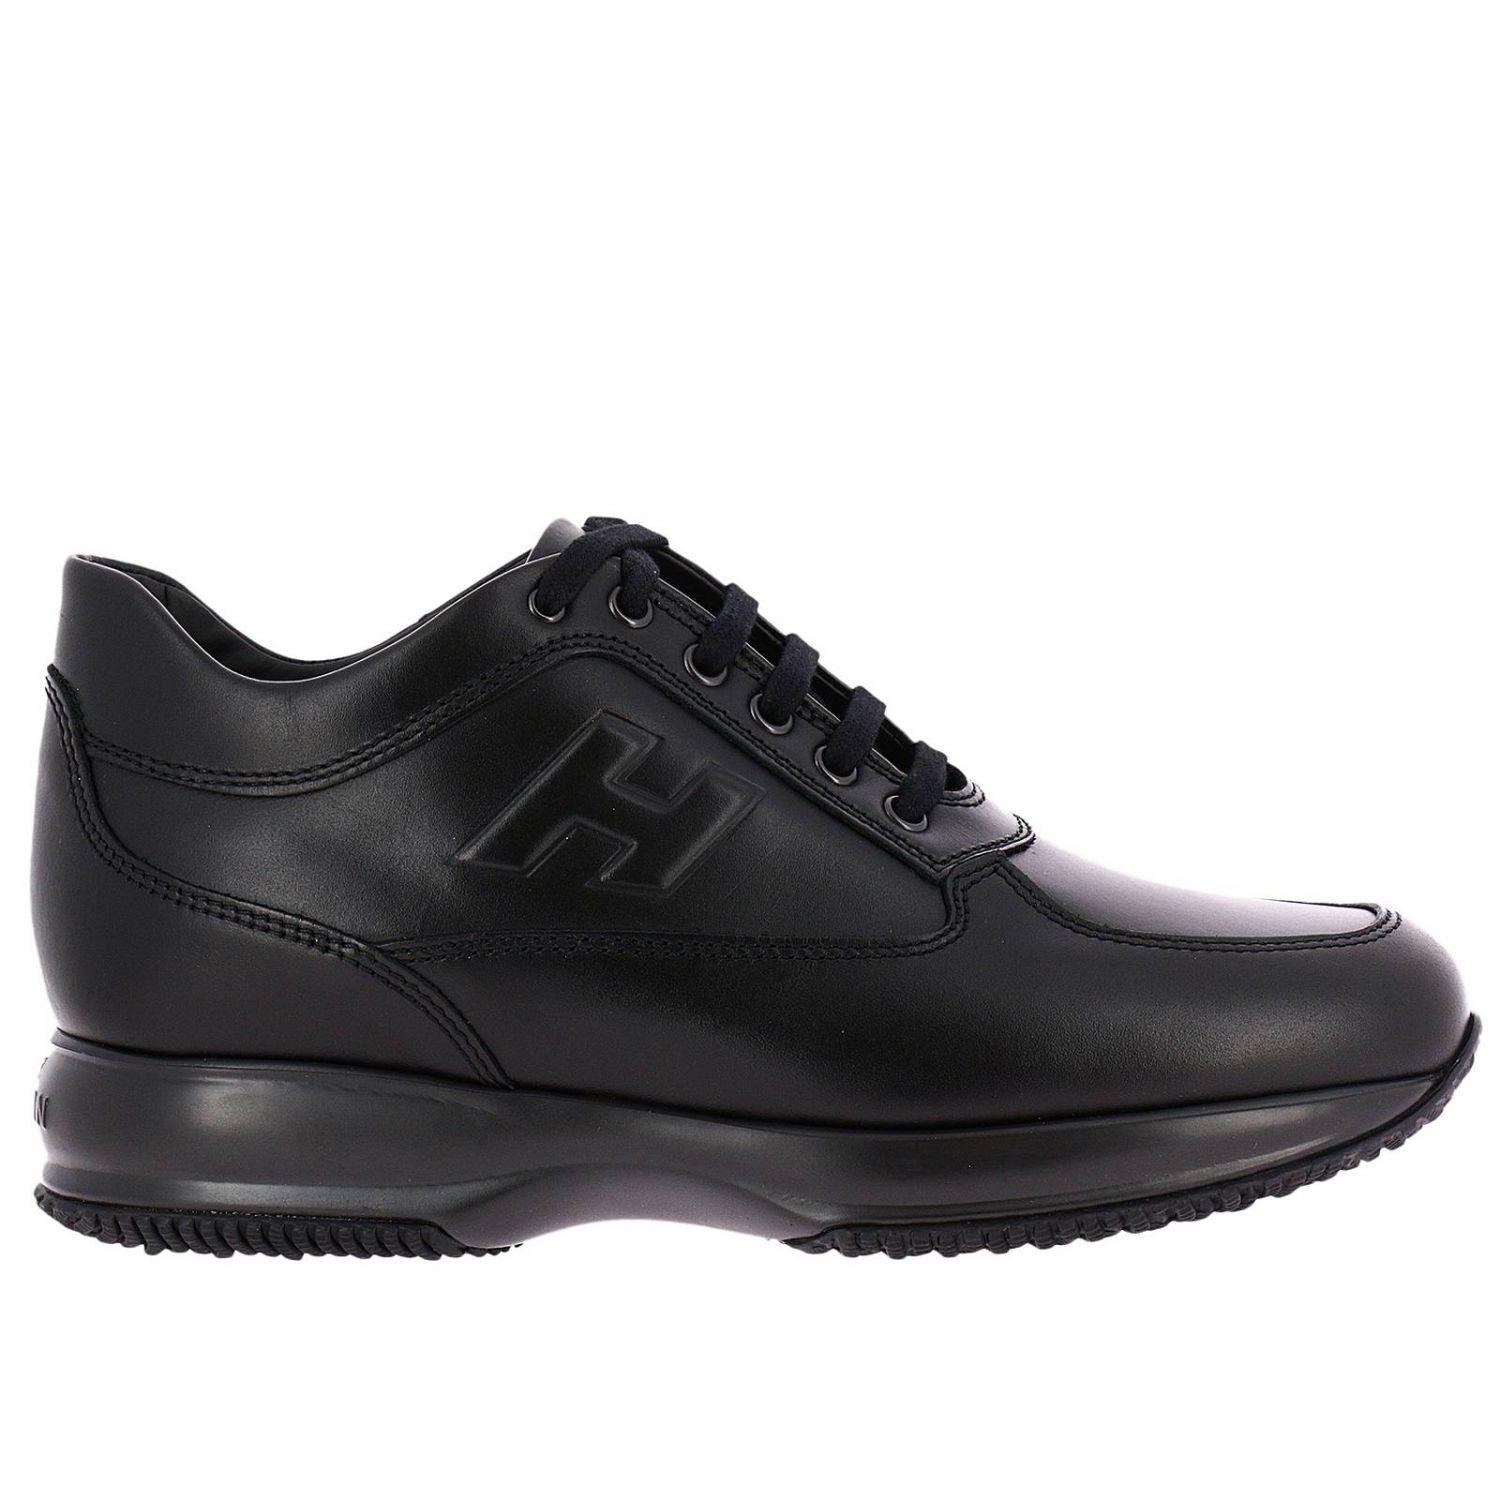 Lyst - Hogan Sneakers Shoes Men in Black for Men